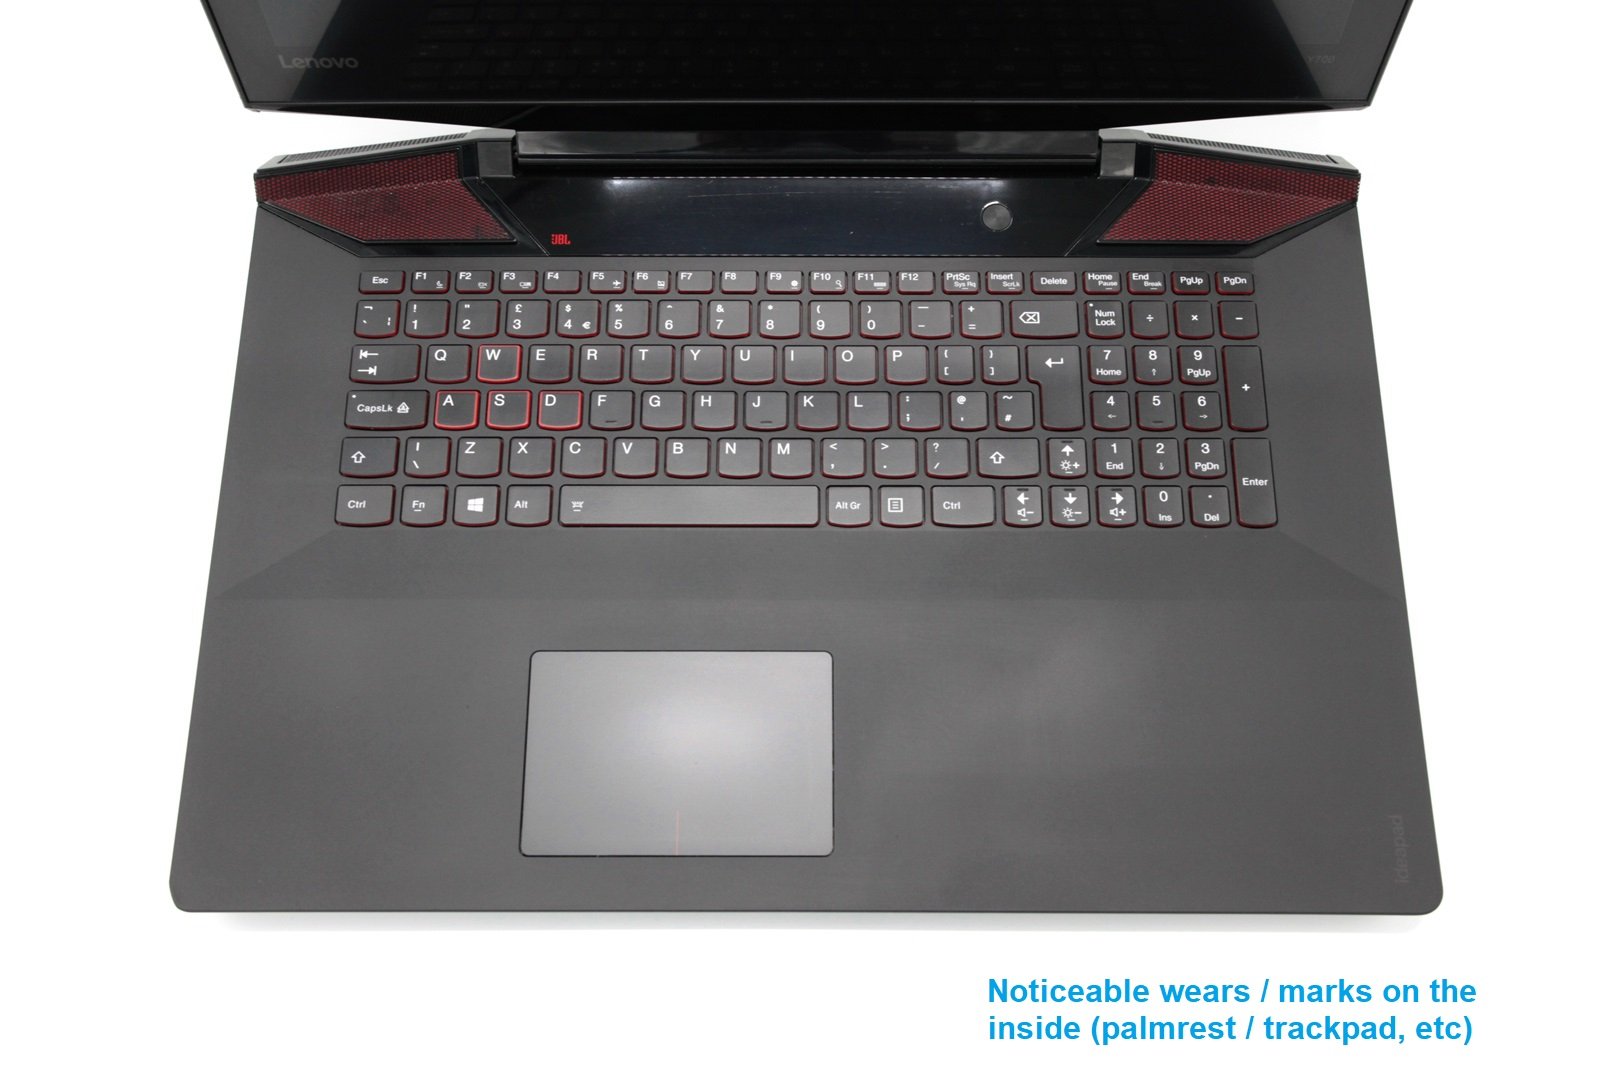 Lenovo Y700 17.3" Gaming Laptop: Core i7-6700HQ, GTX 960M, 256GB SSD - CruiseTech